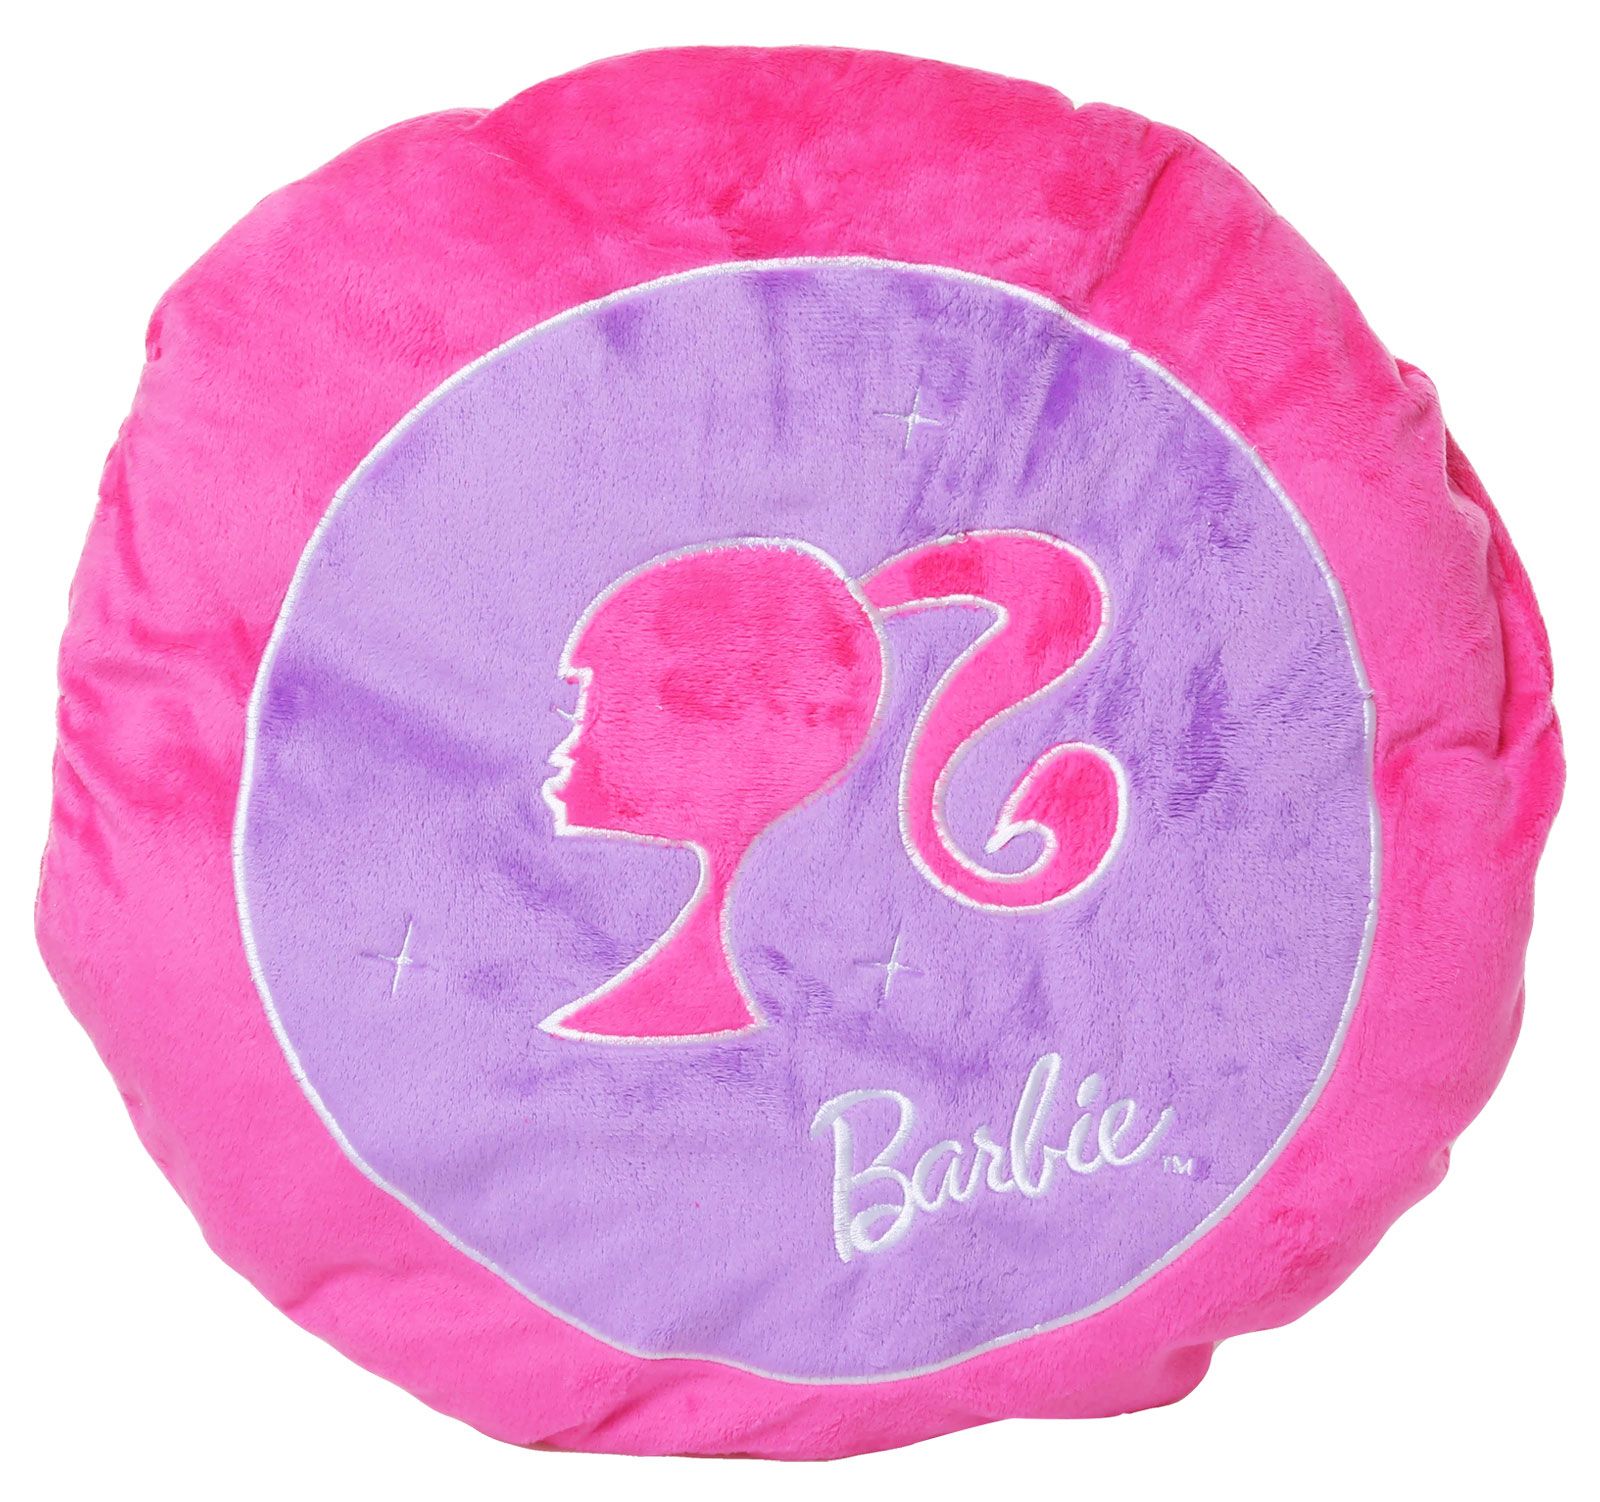 Barbie - Round Cushion